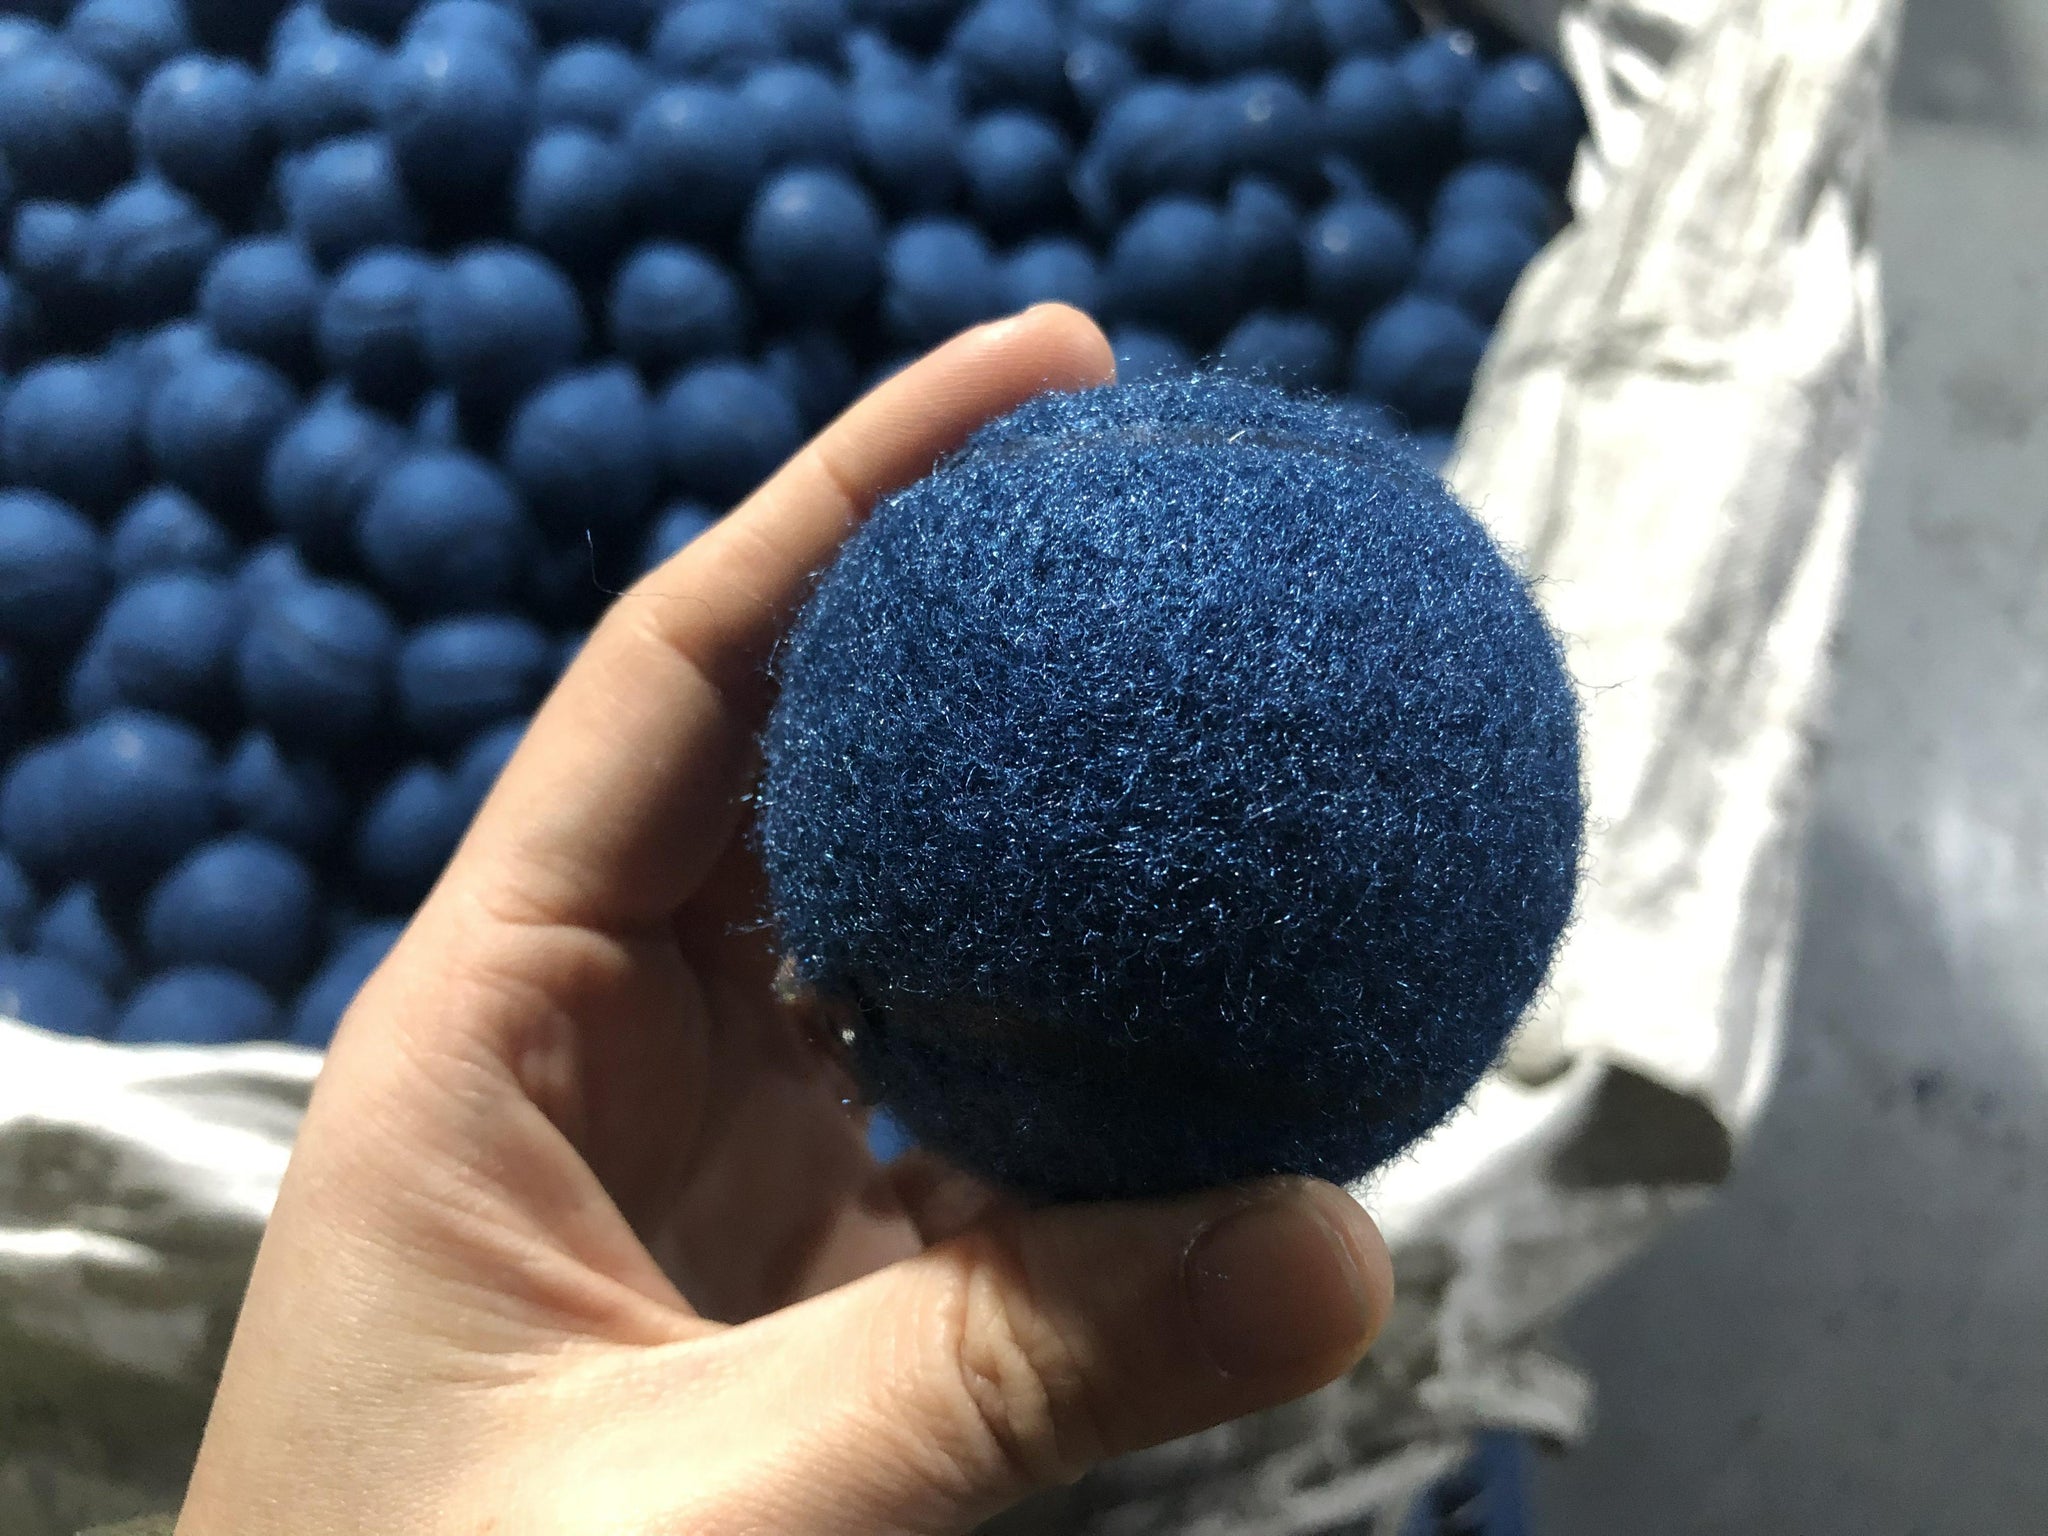 Medium Blue Furniture Balls (Racquetball Size) - 200 Count